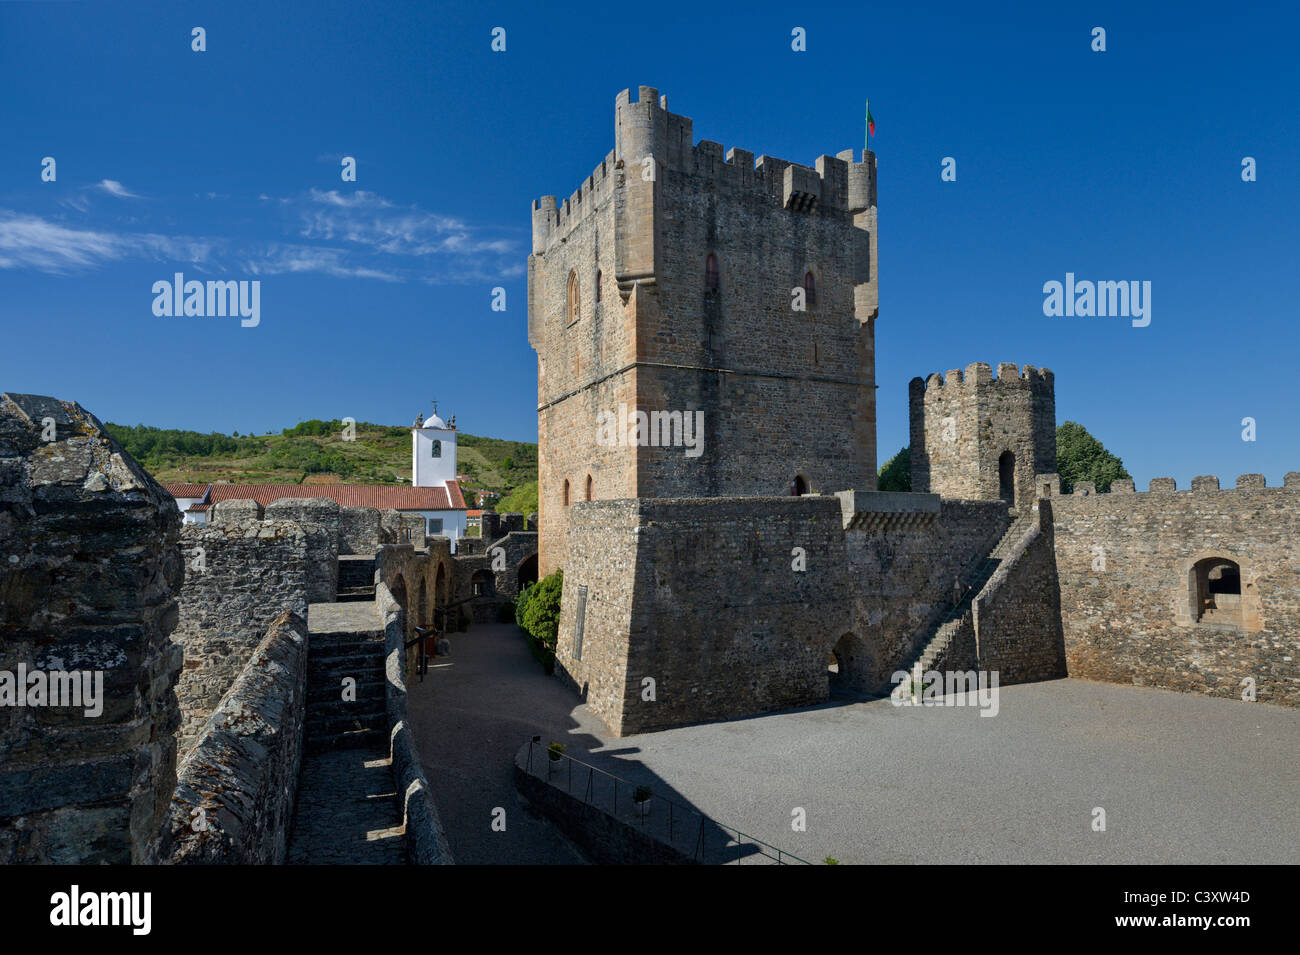 Portugal, Tras-os-montes, Braganca castle Stock Photo